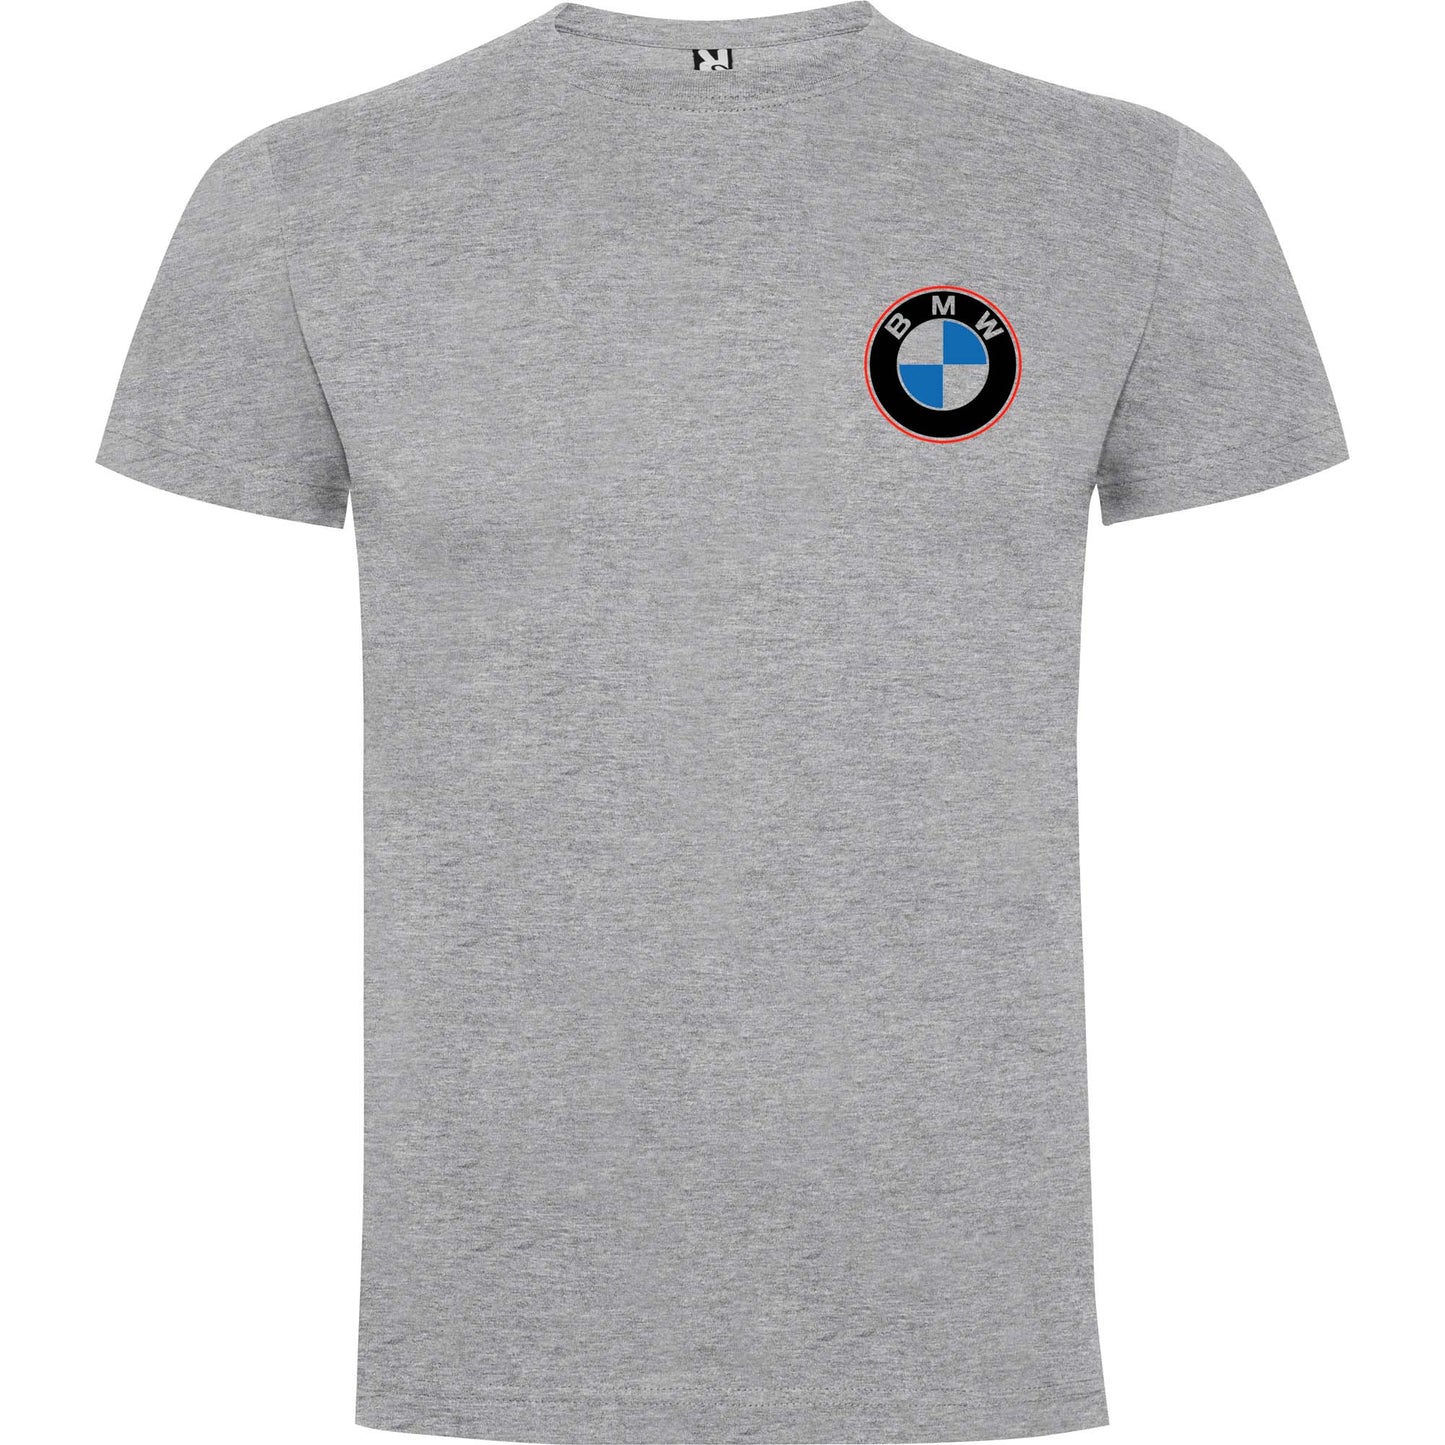 Camiseta personalizada BMW GS1200R